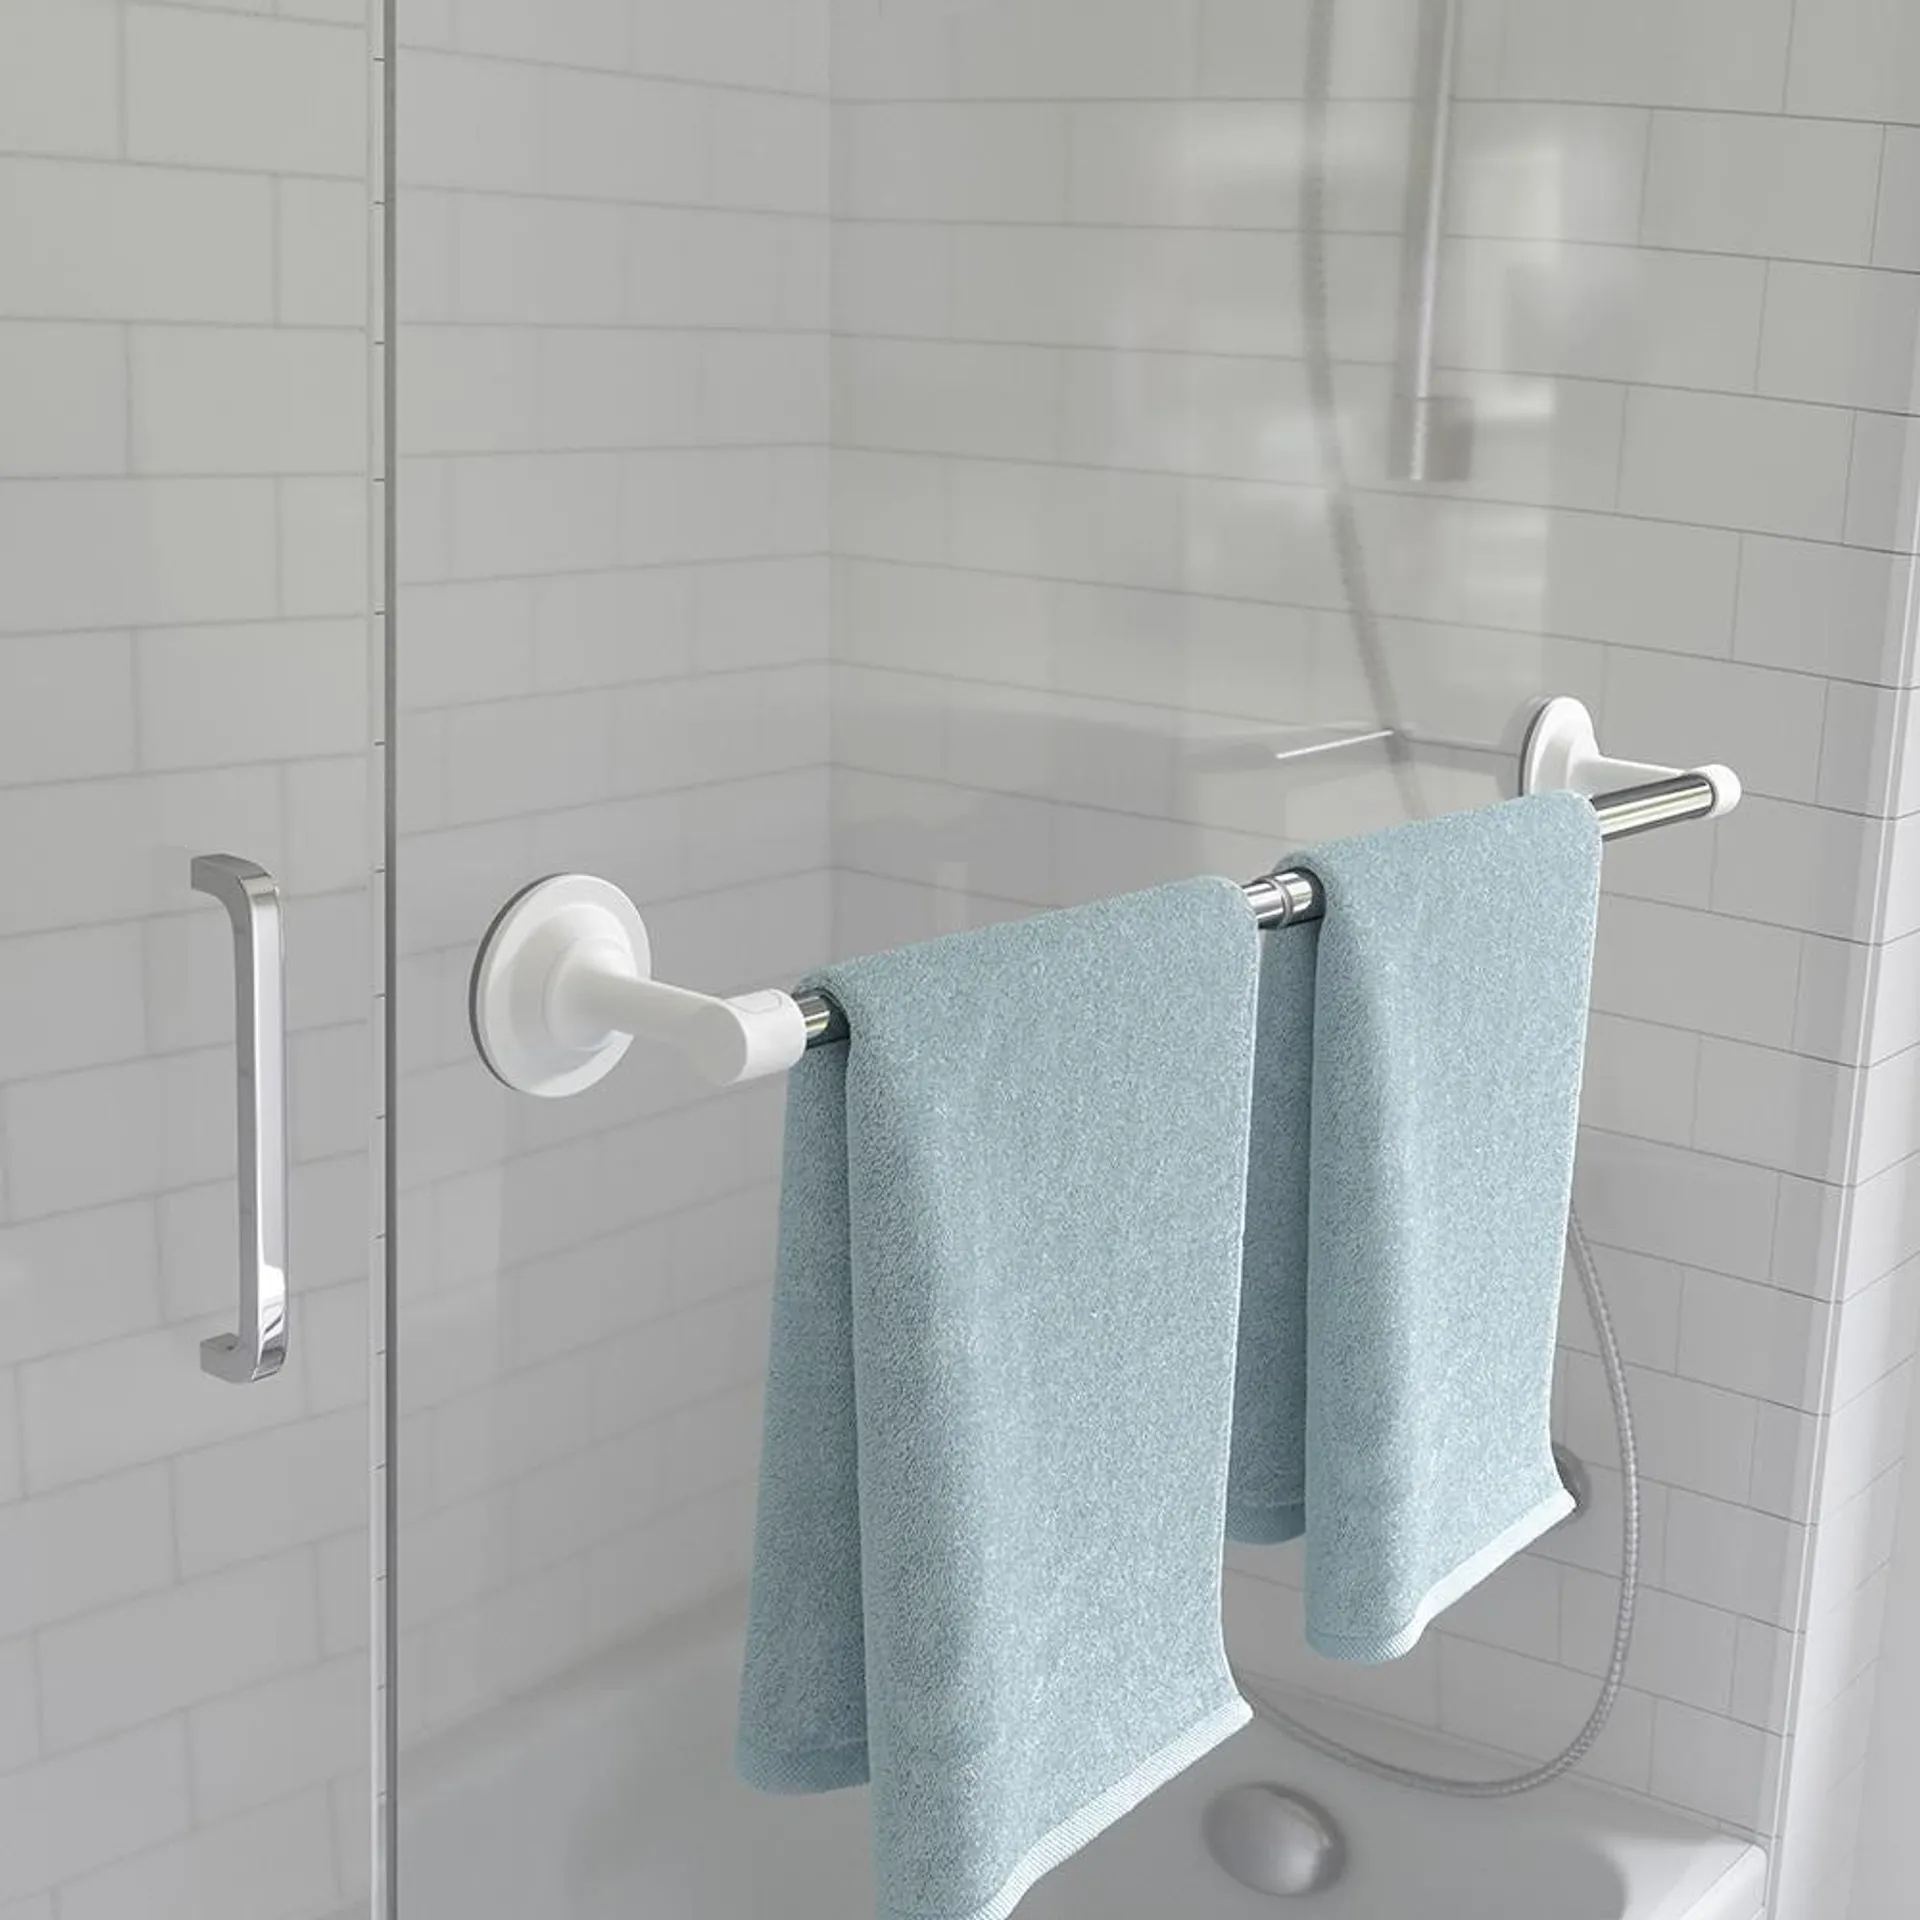 Umbra Flex Sure-Lock Towel Bar (White)